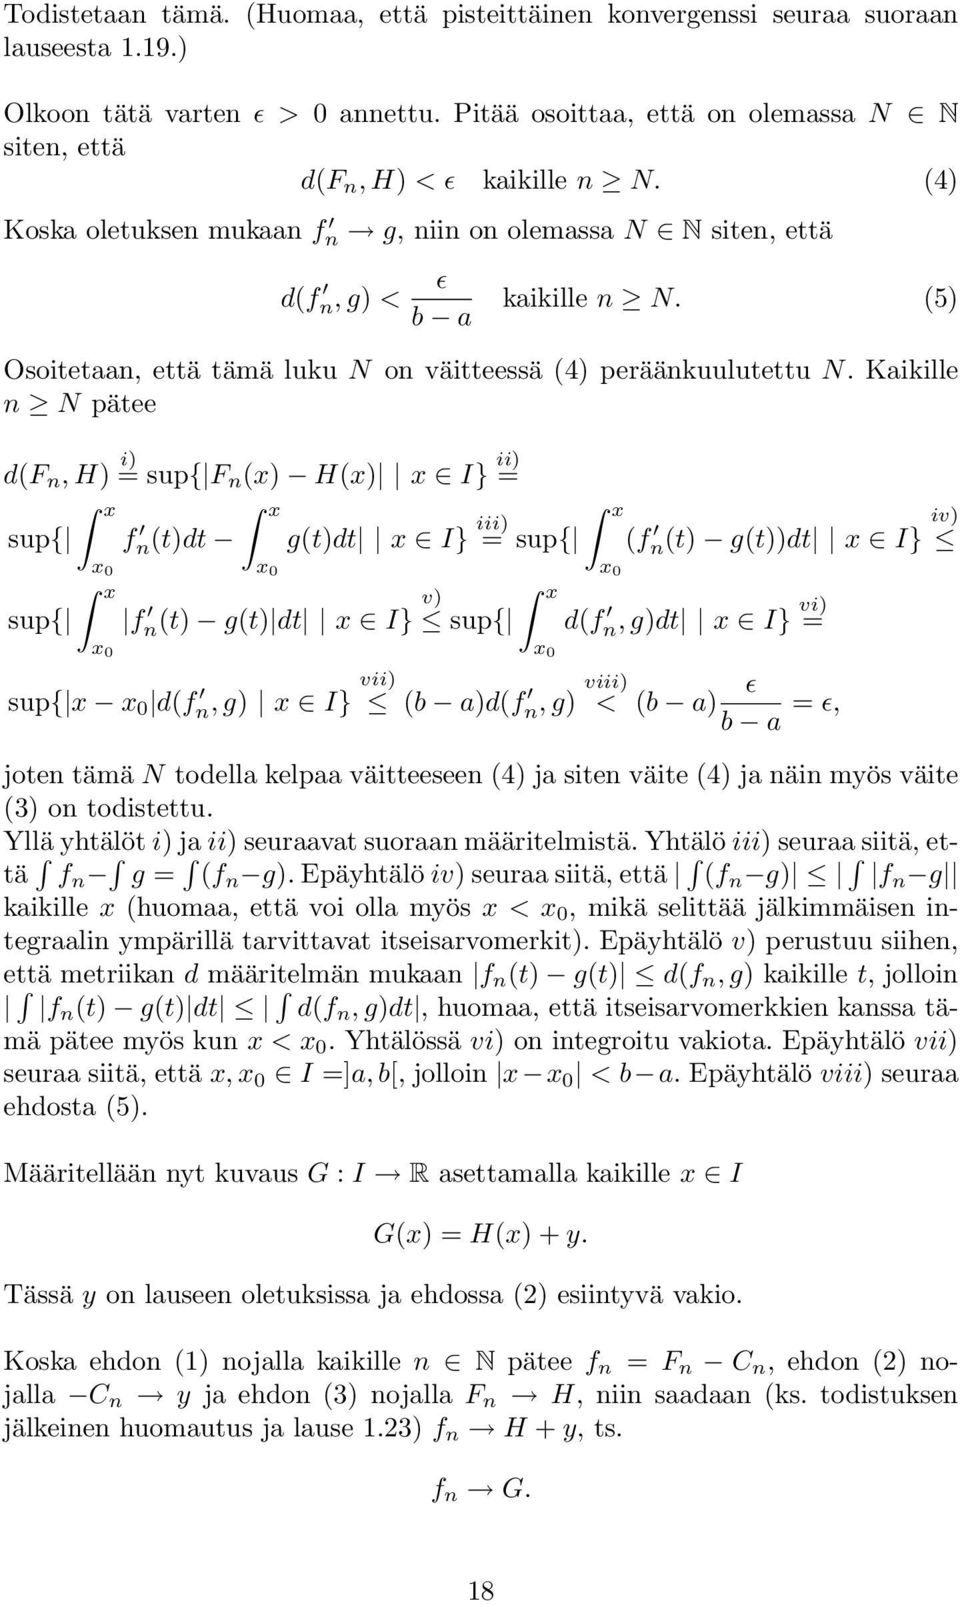 Kaikille n N pätee d(f n, H) = i) sup{ F n (x) H(x) x I} ii) = x x sup{ f n(t)dt g(t)dt x I} iii) = sup{ (f n(t) g(t))dt x I} iv) x 0 x 0 x 0 x sup{ f n(t) g(t) dt x I} v) x sup{ d(f n, g)dt x I} vi)